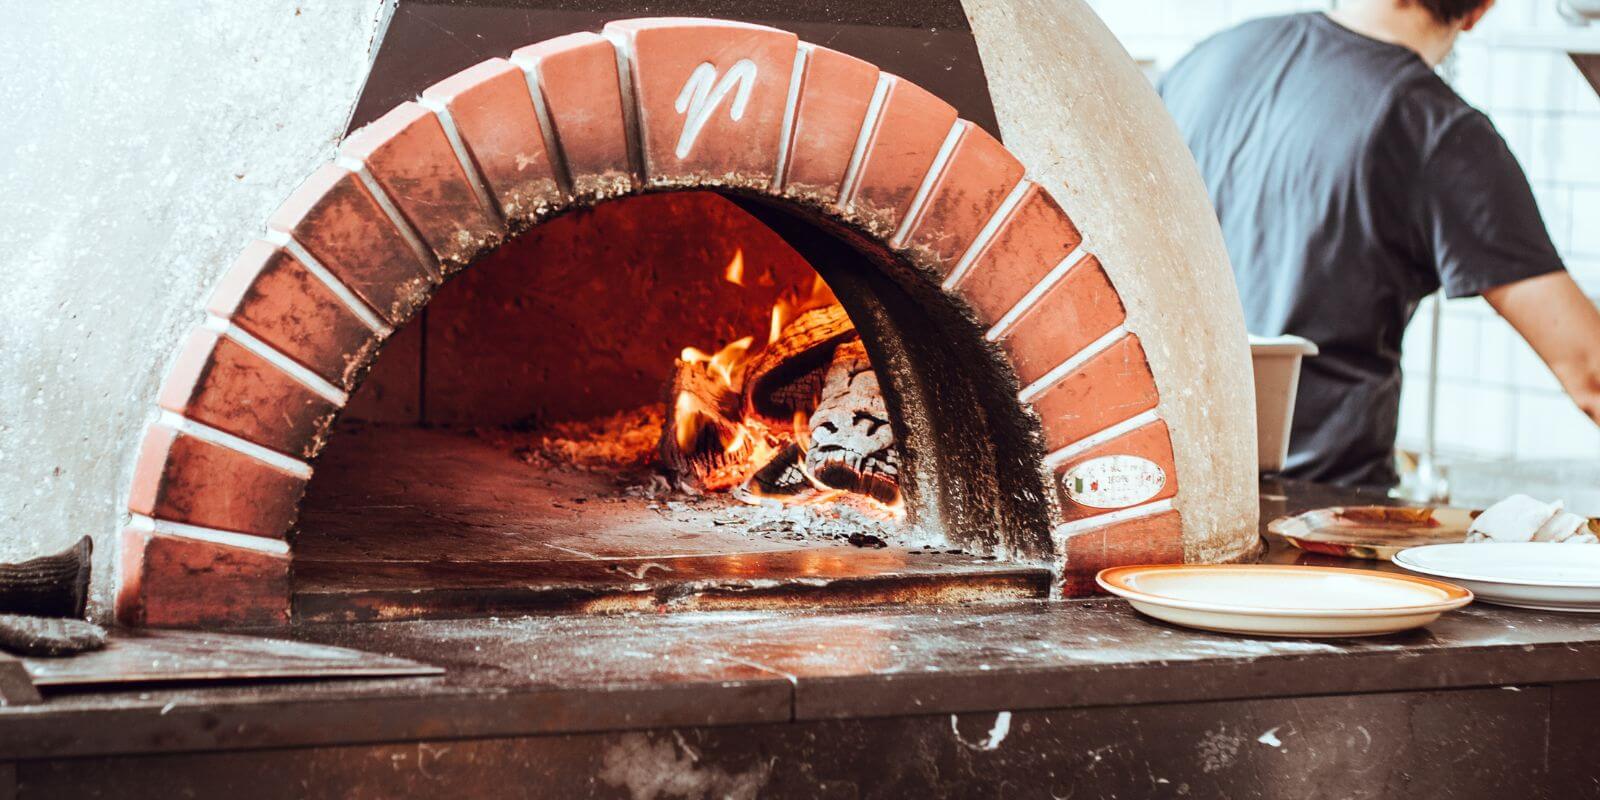 valoriani vesuvio wood fired pizza oven kit in commercial restaurant